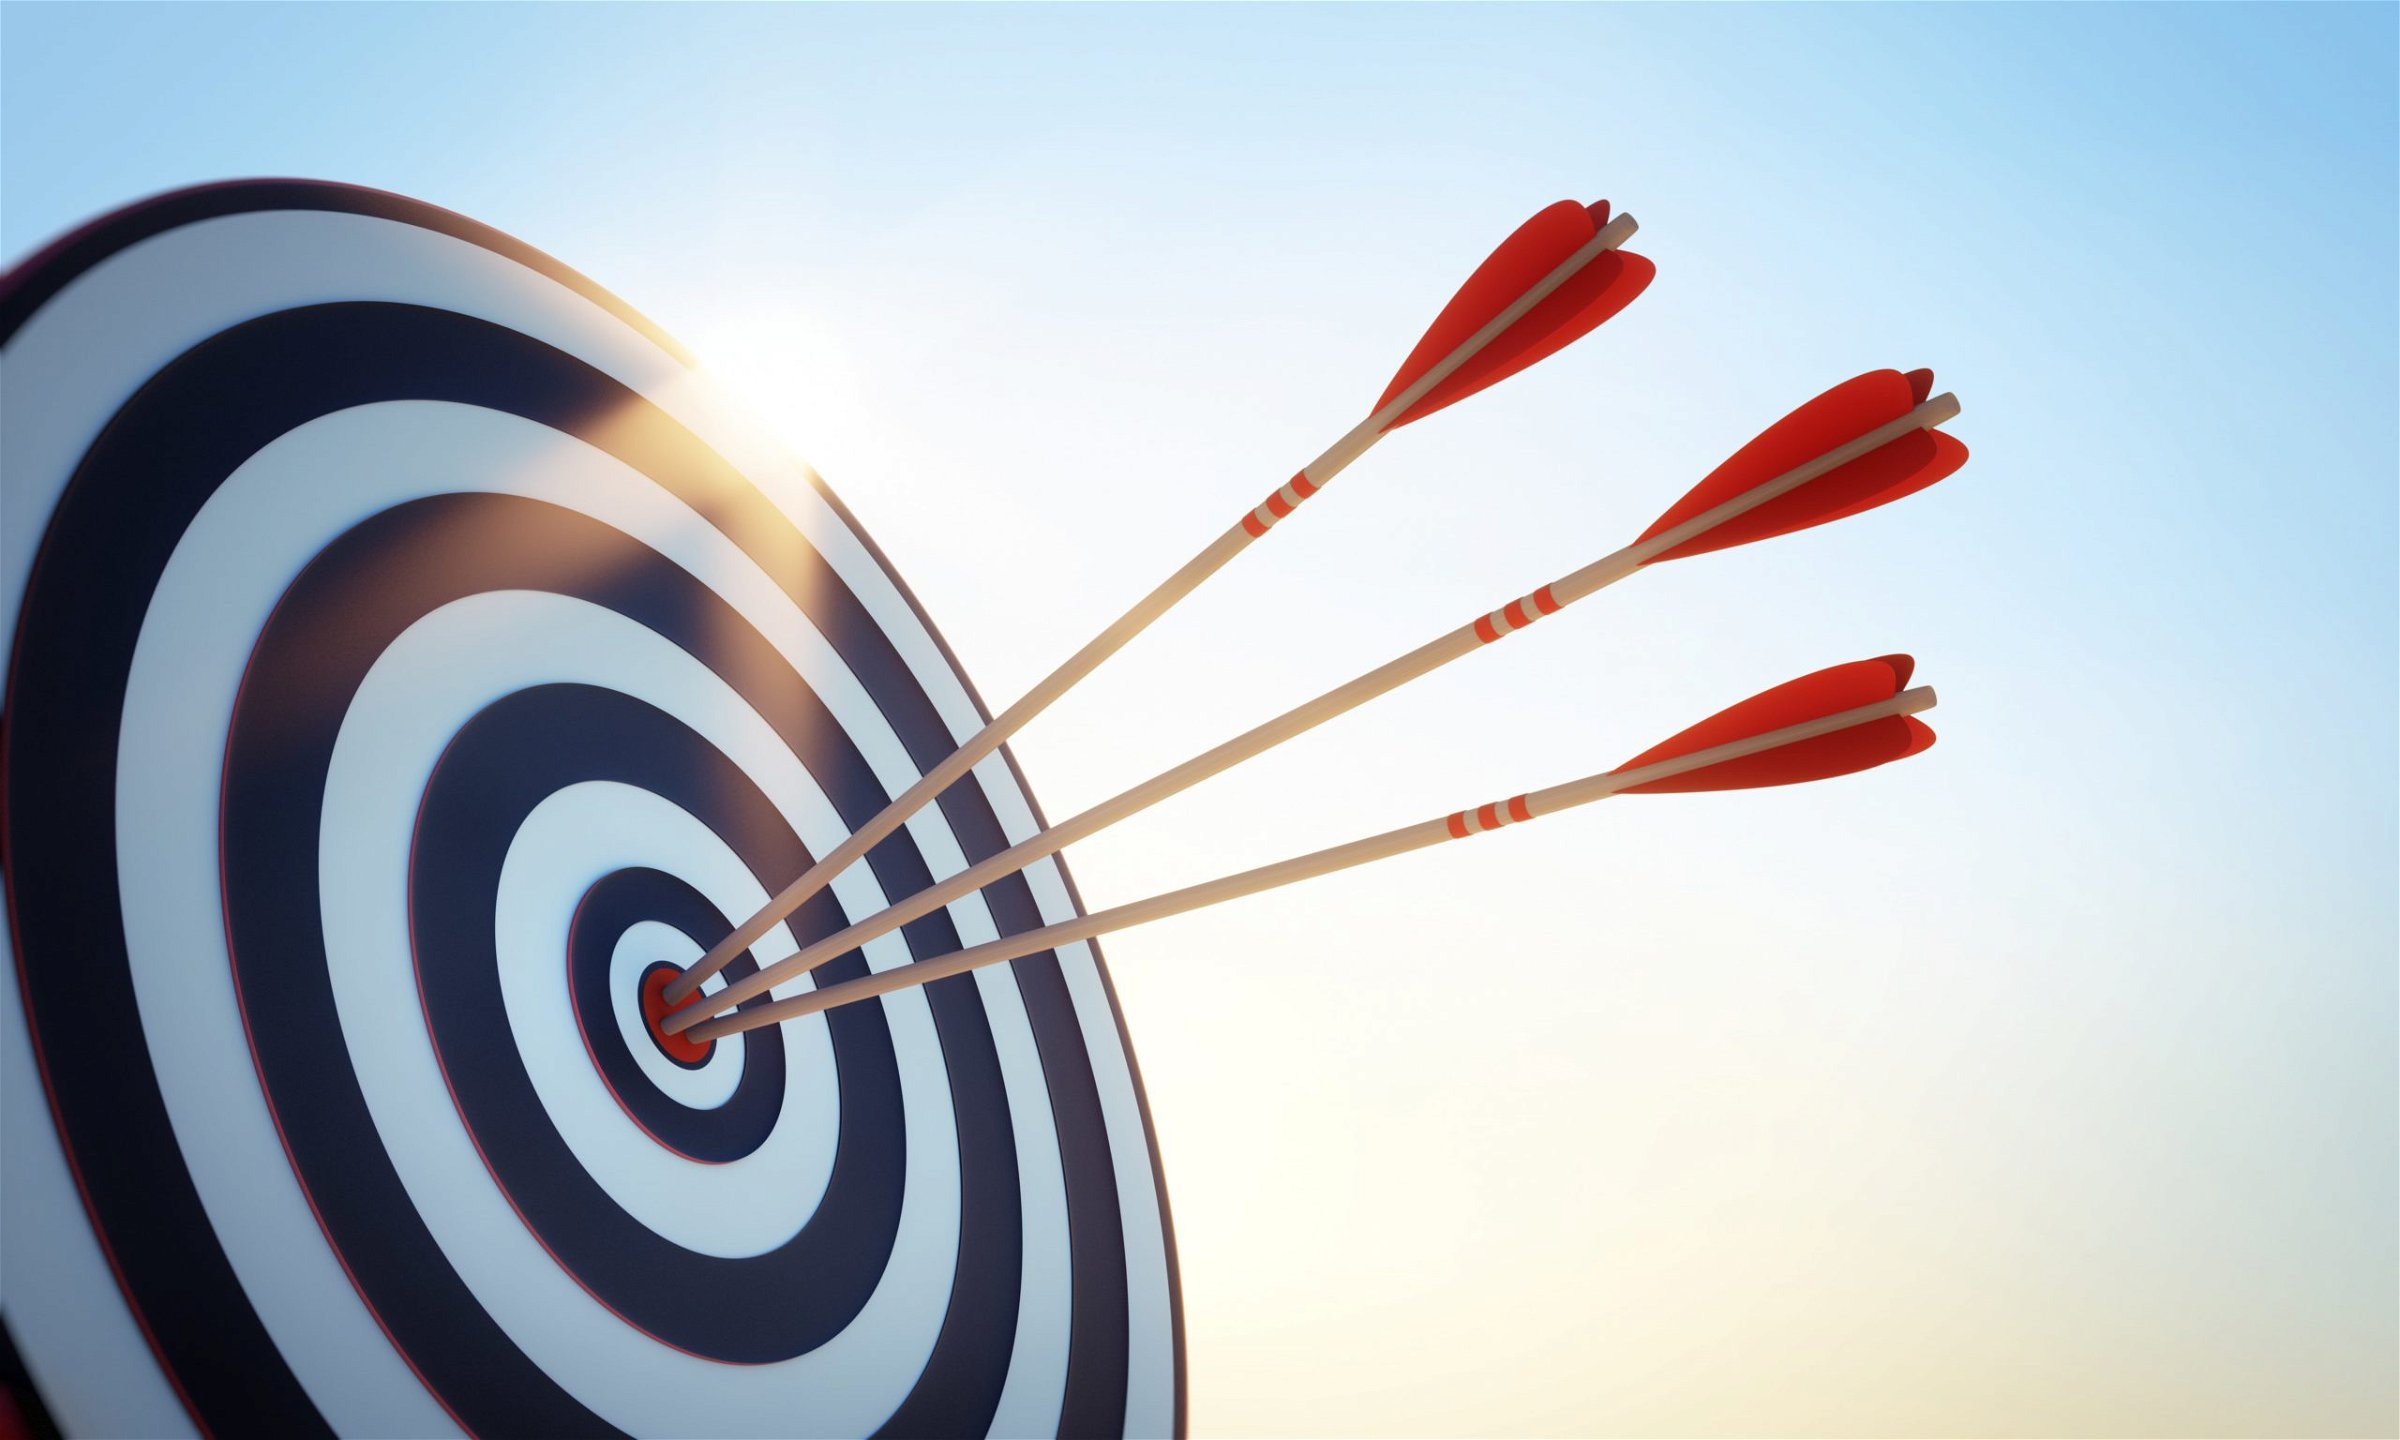 3 arrows in the bulls-eye of a target